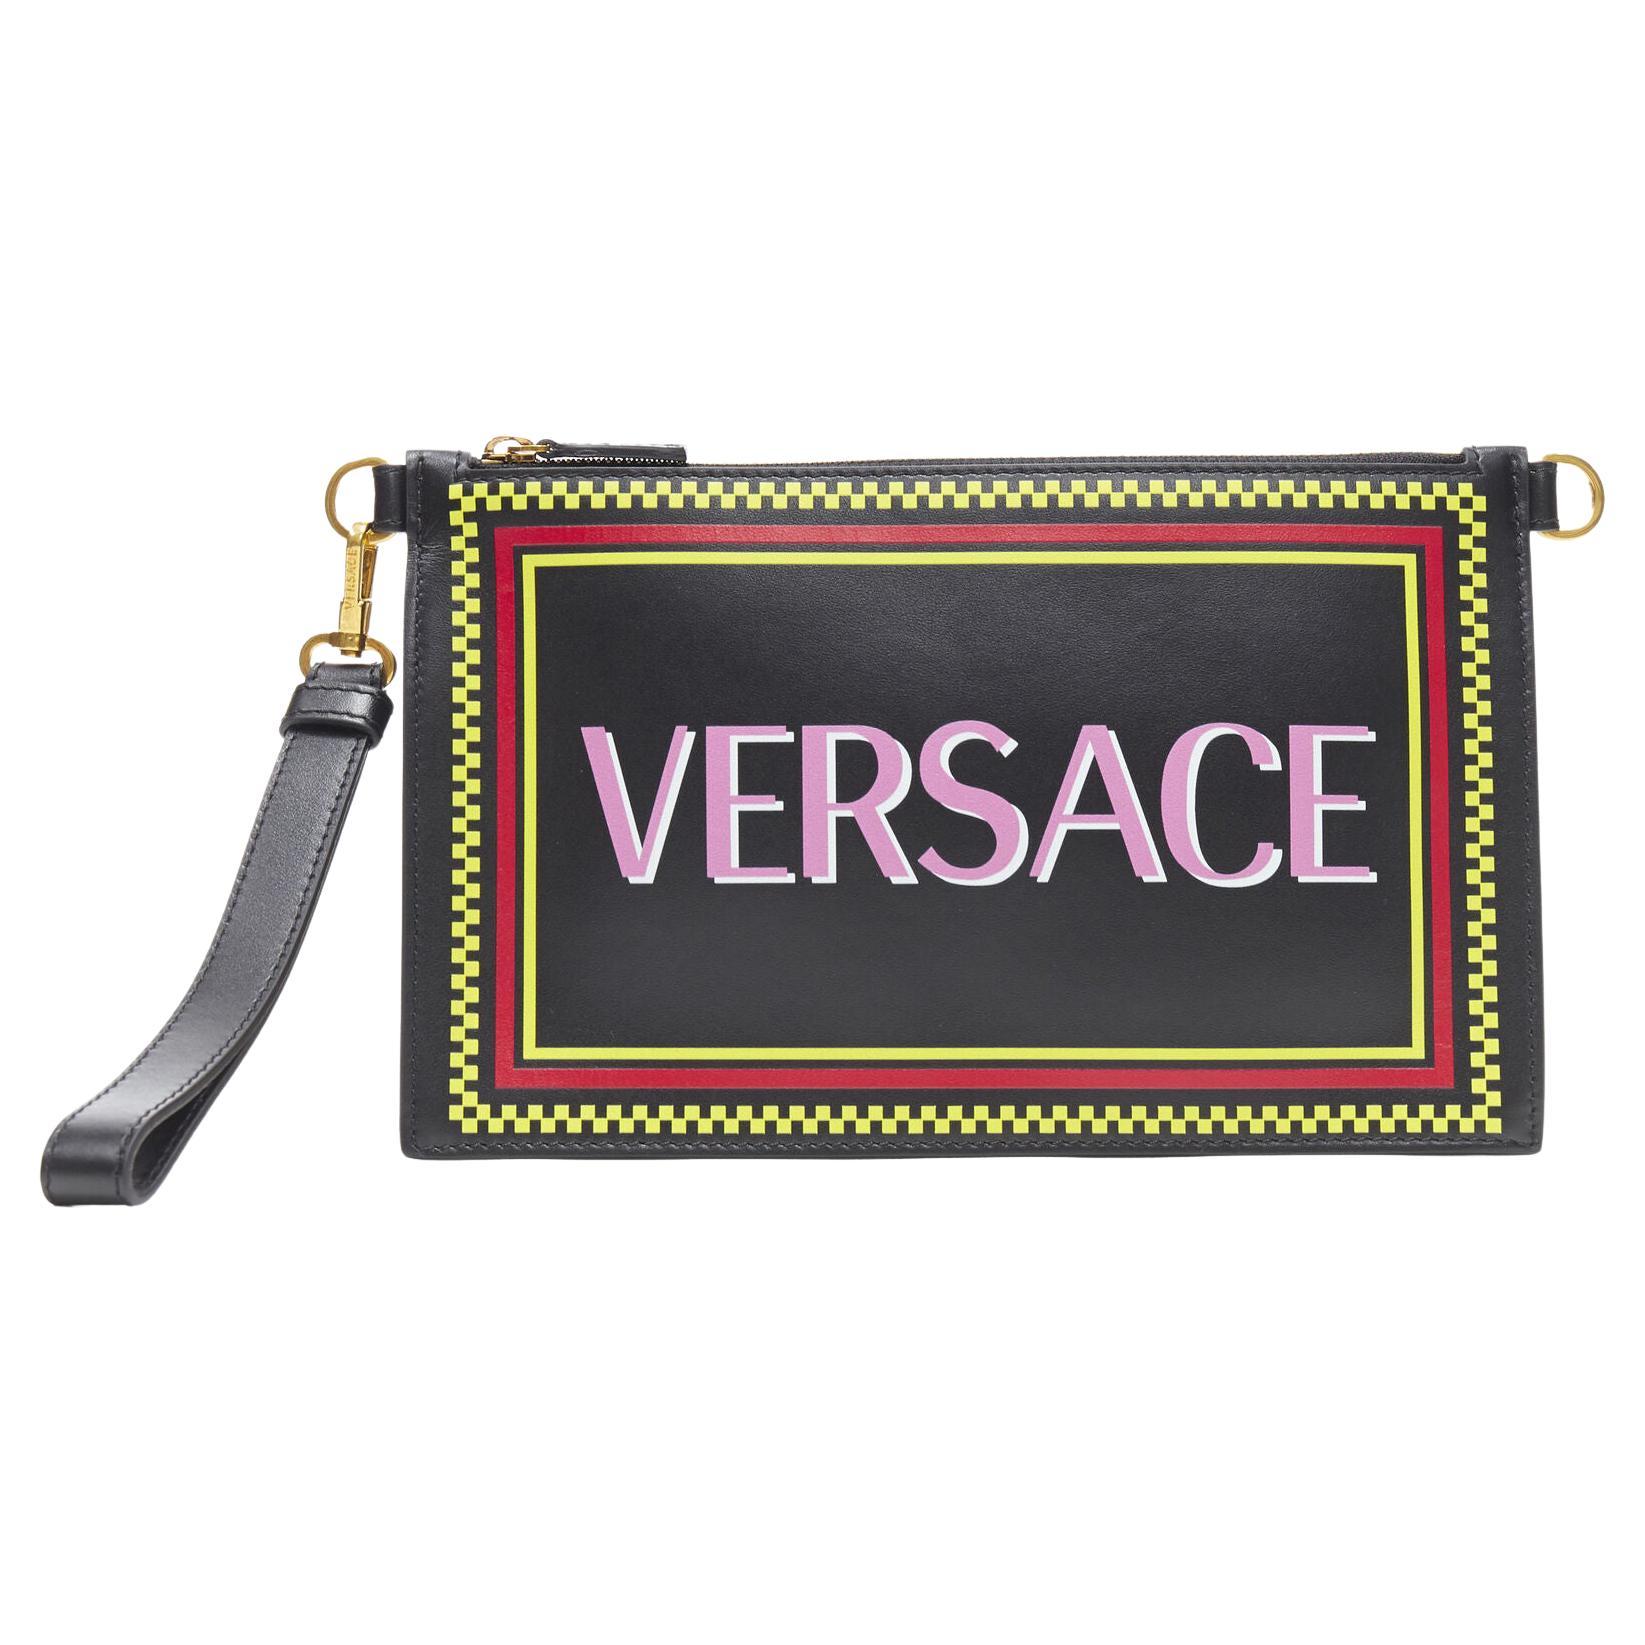 new VERSACE 90s graphic logo black calf zip pouch crossbody clutch bag